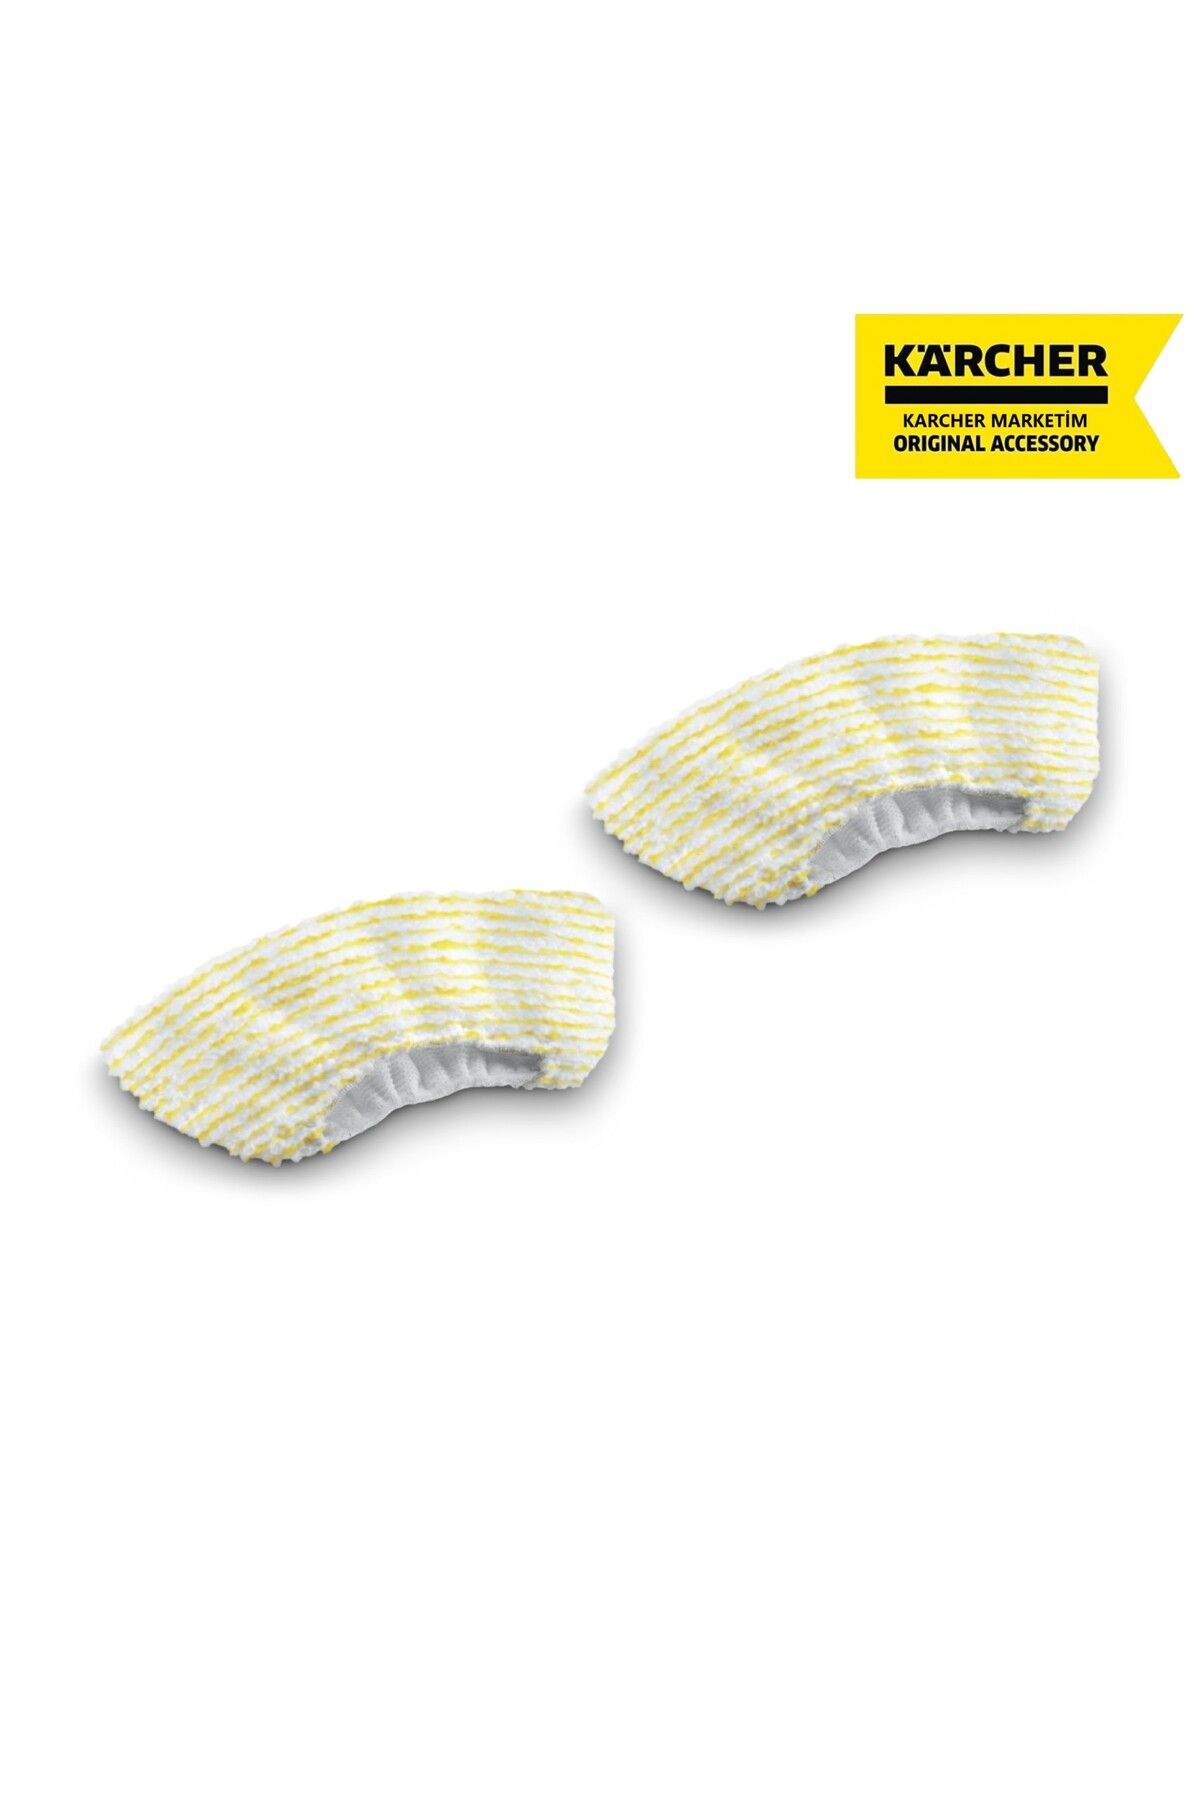 Karcher KarcherSc Easyfix Serisi El Aparatı Havlu Seti NEW VERSİON